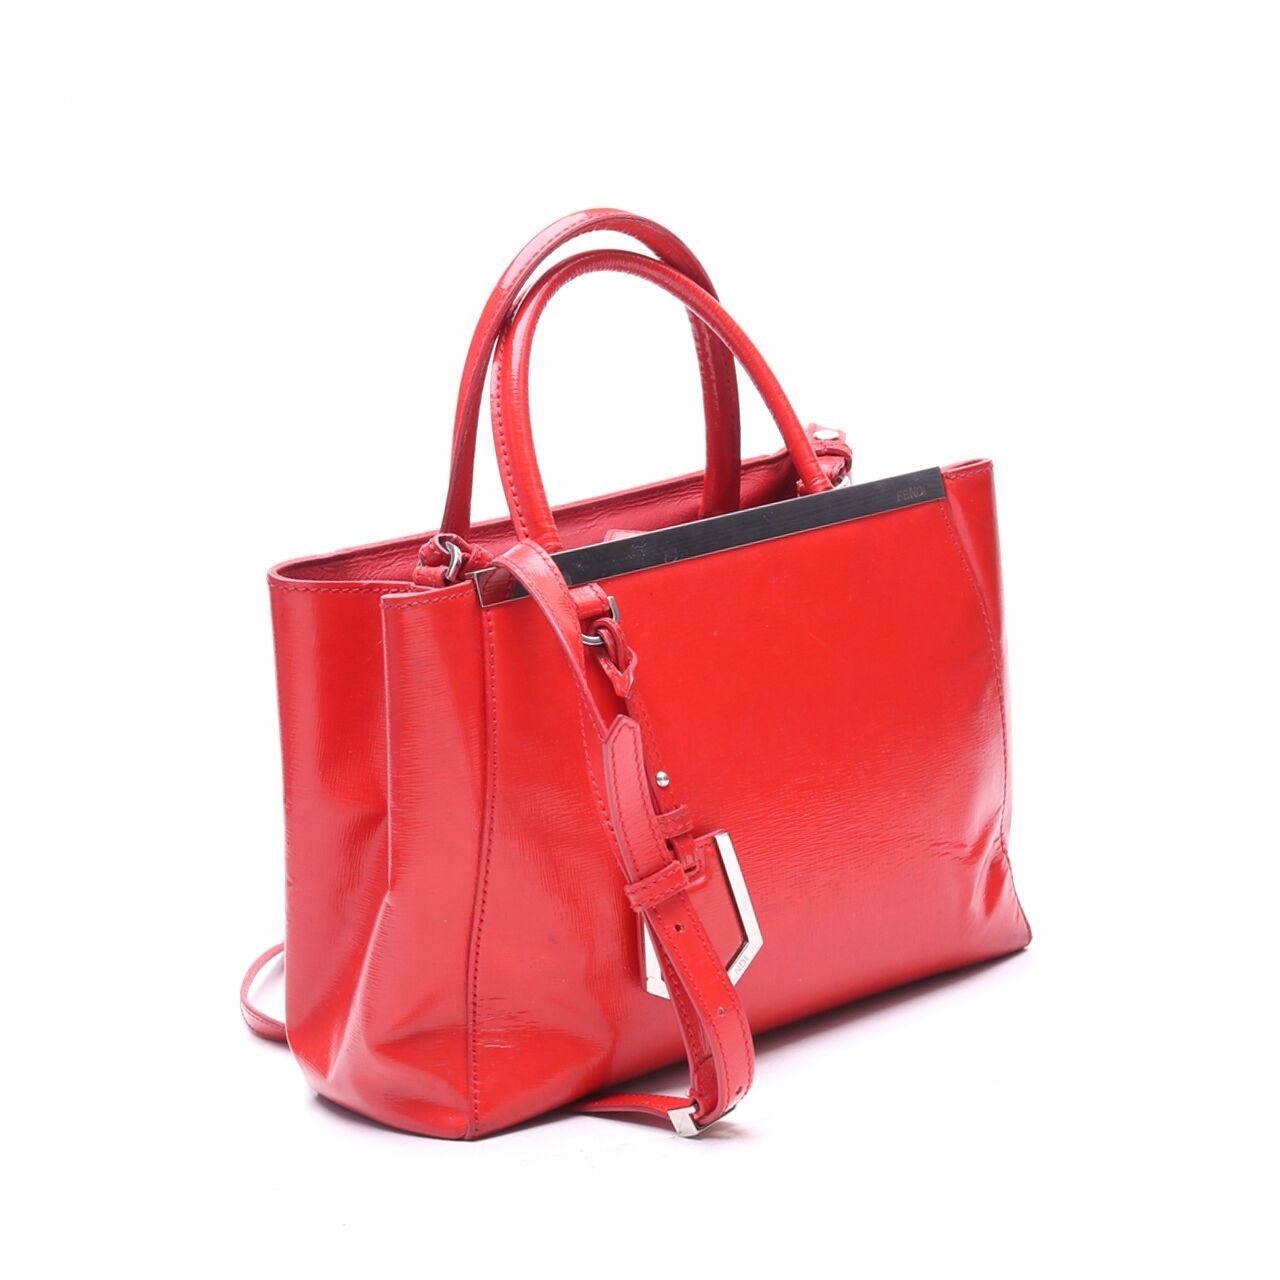 Fendi 2Jours Leather Red Satchel Bag 